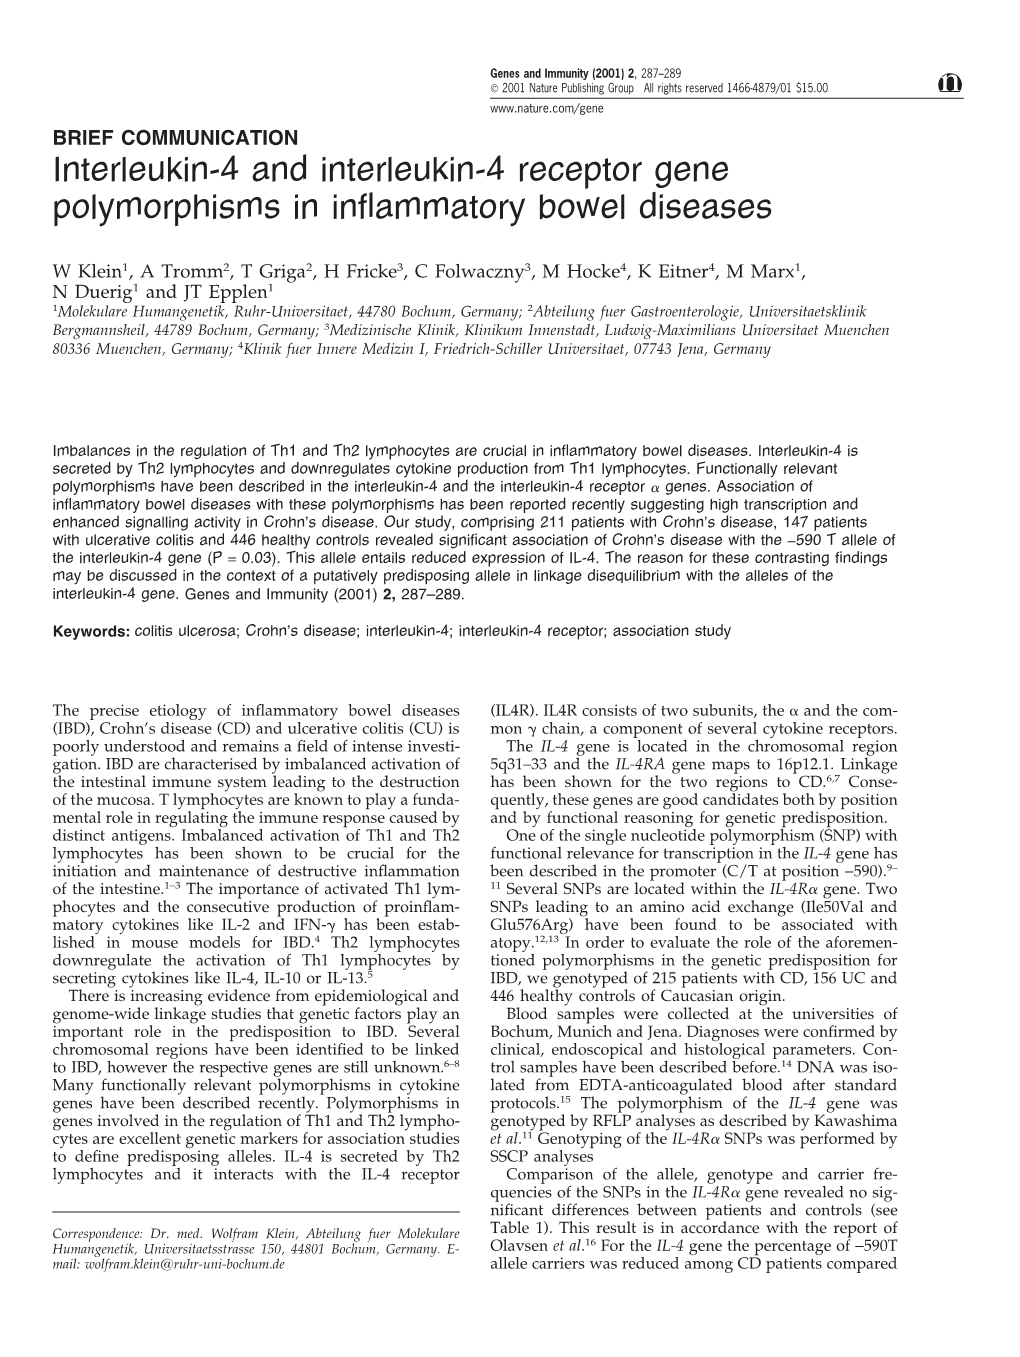 Interleukin-4 and Interleukin-4 Receptor Gene Polymorphisms in Inﬂammatory Bowel Diseases